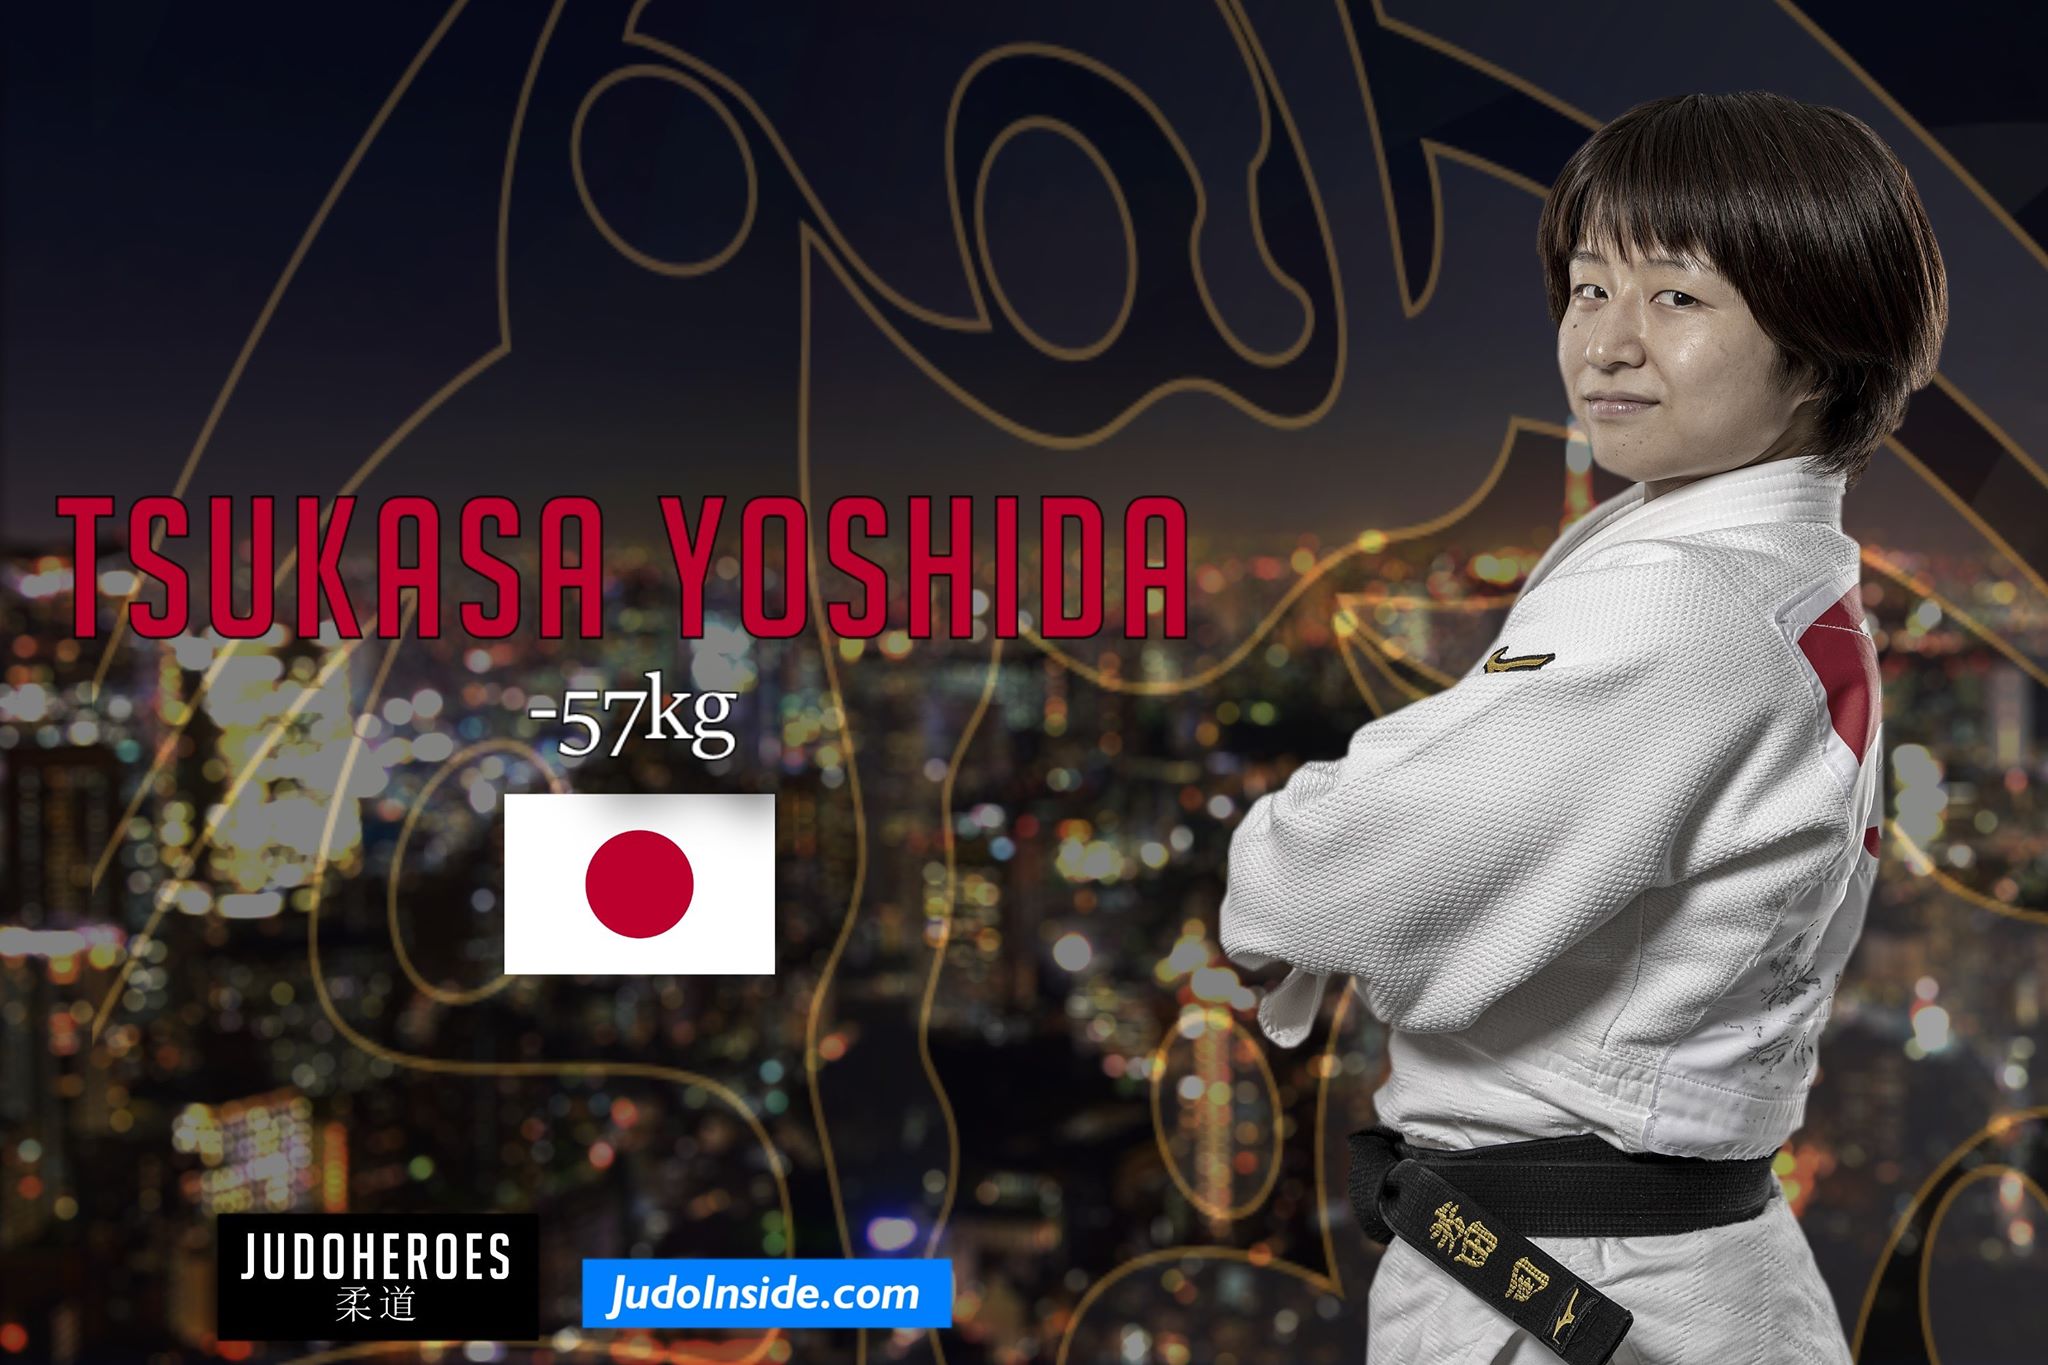 20190817_jh_judoworlds_jpn_tsukasa_yoshida